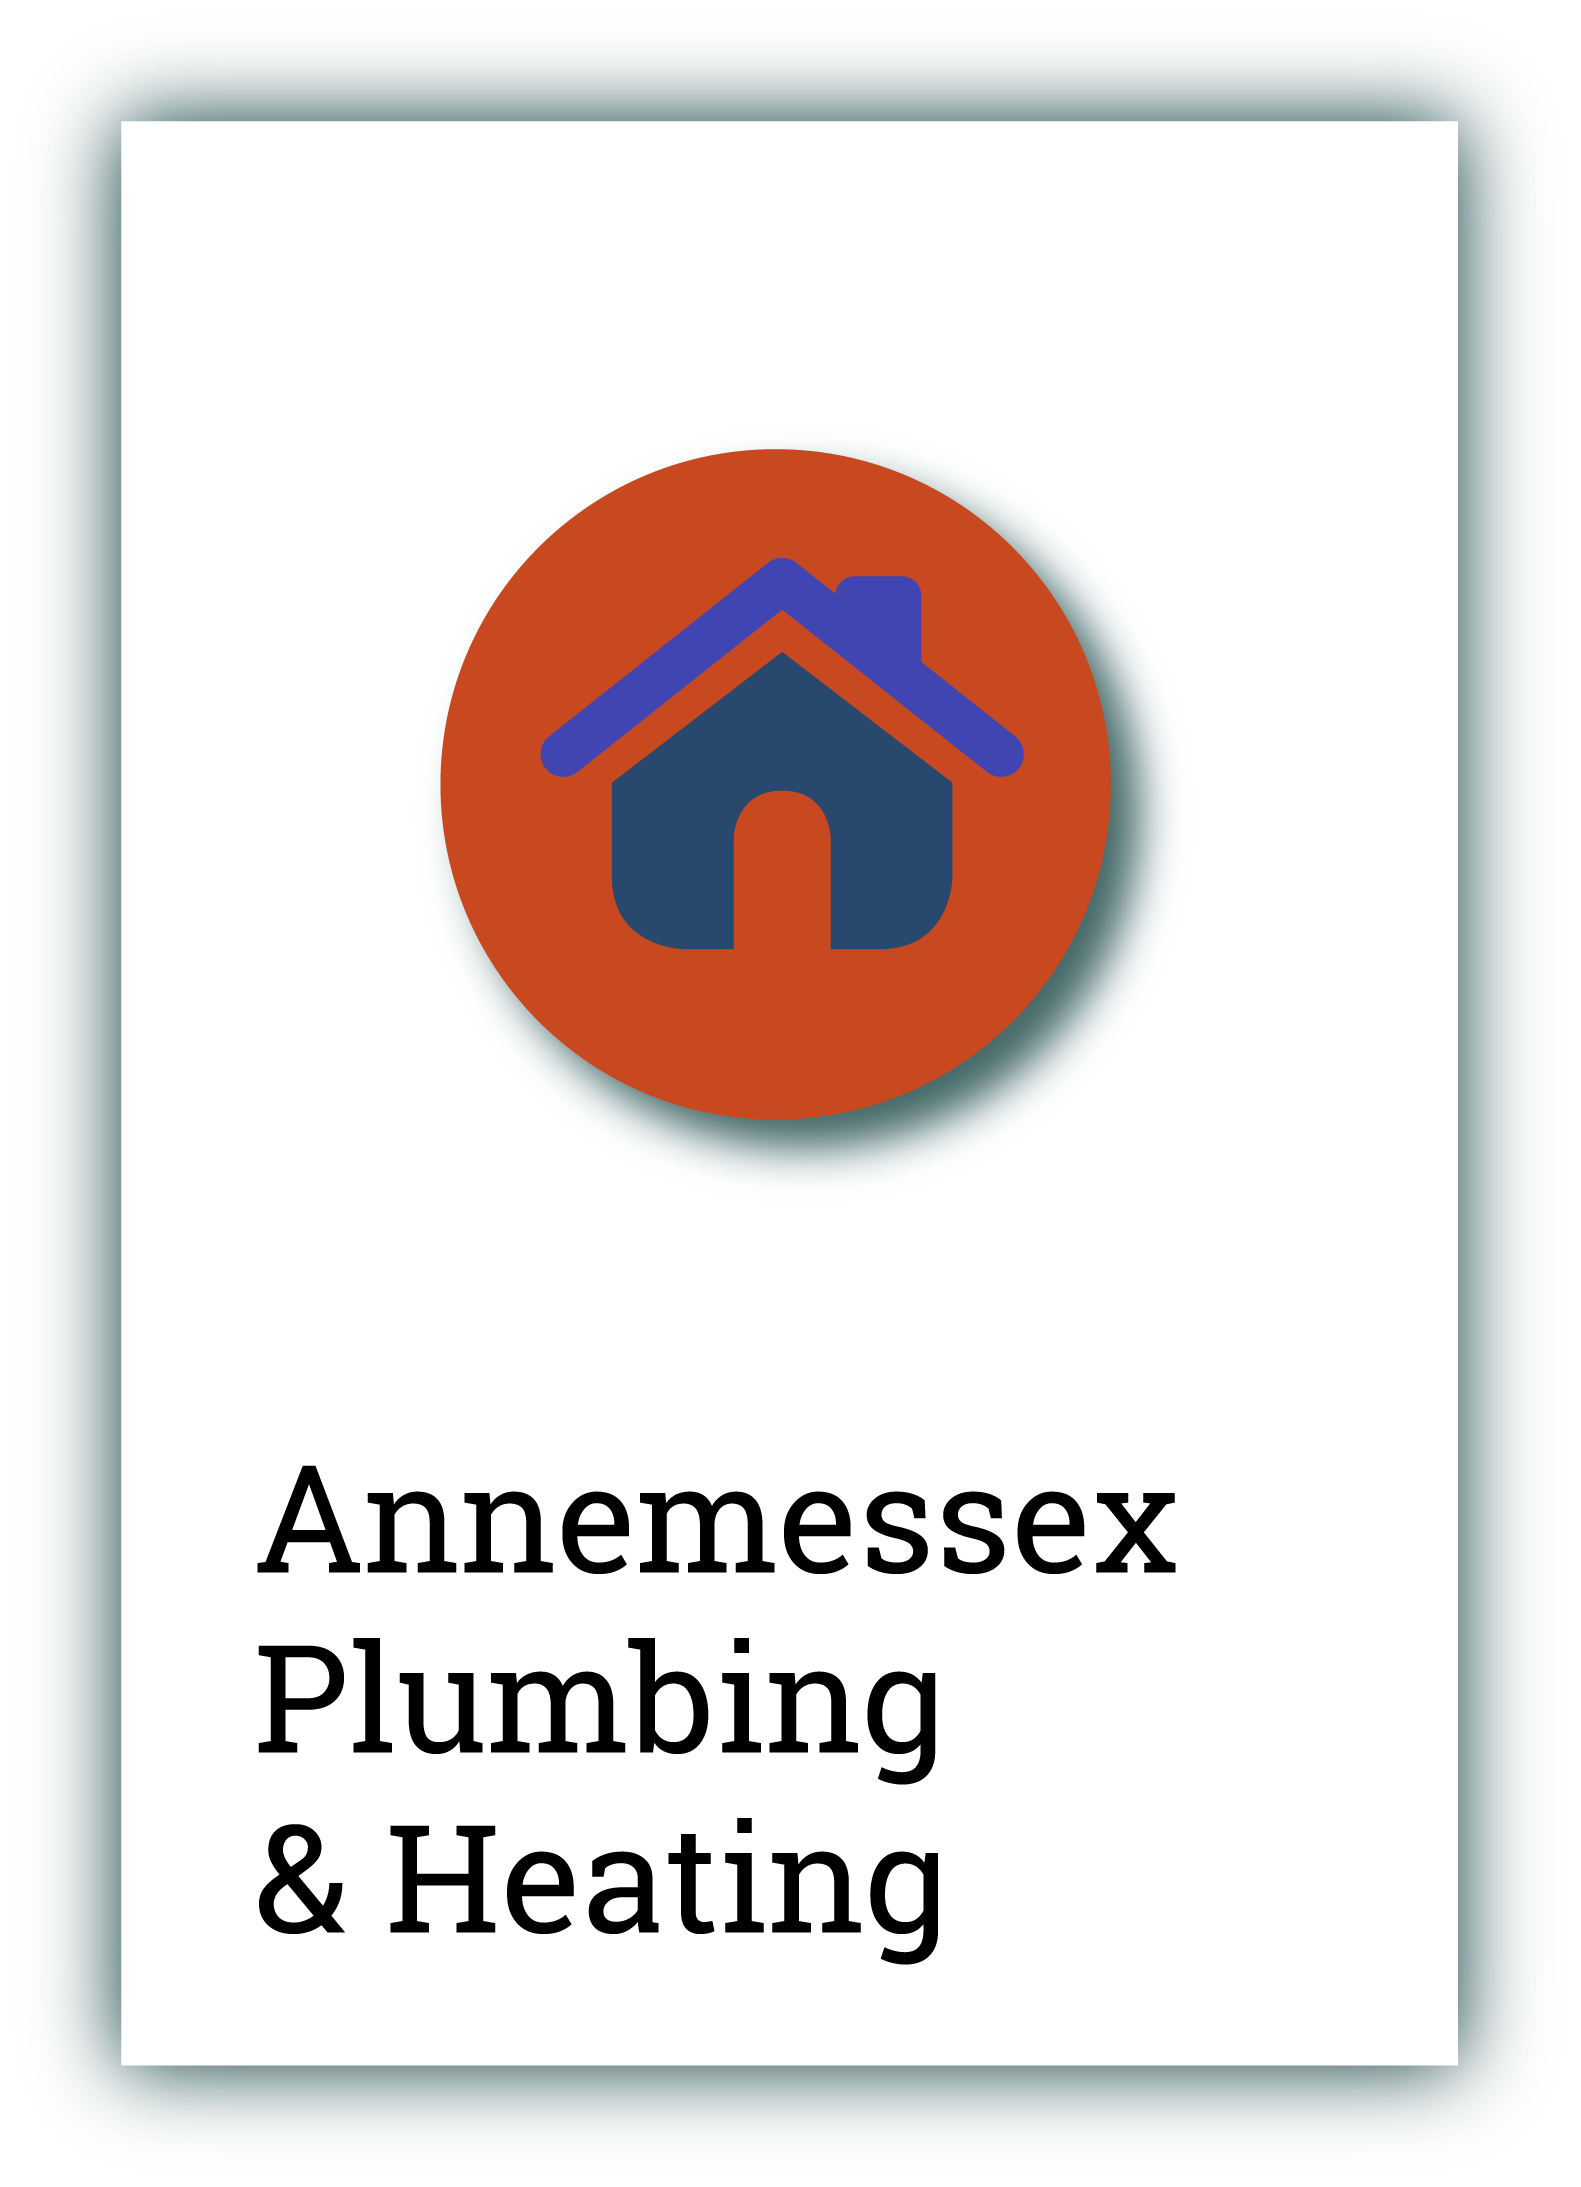 Annemessex Plumbing & Heating